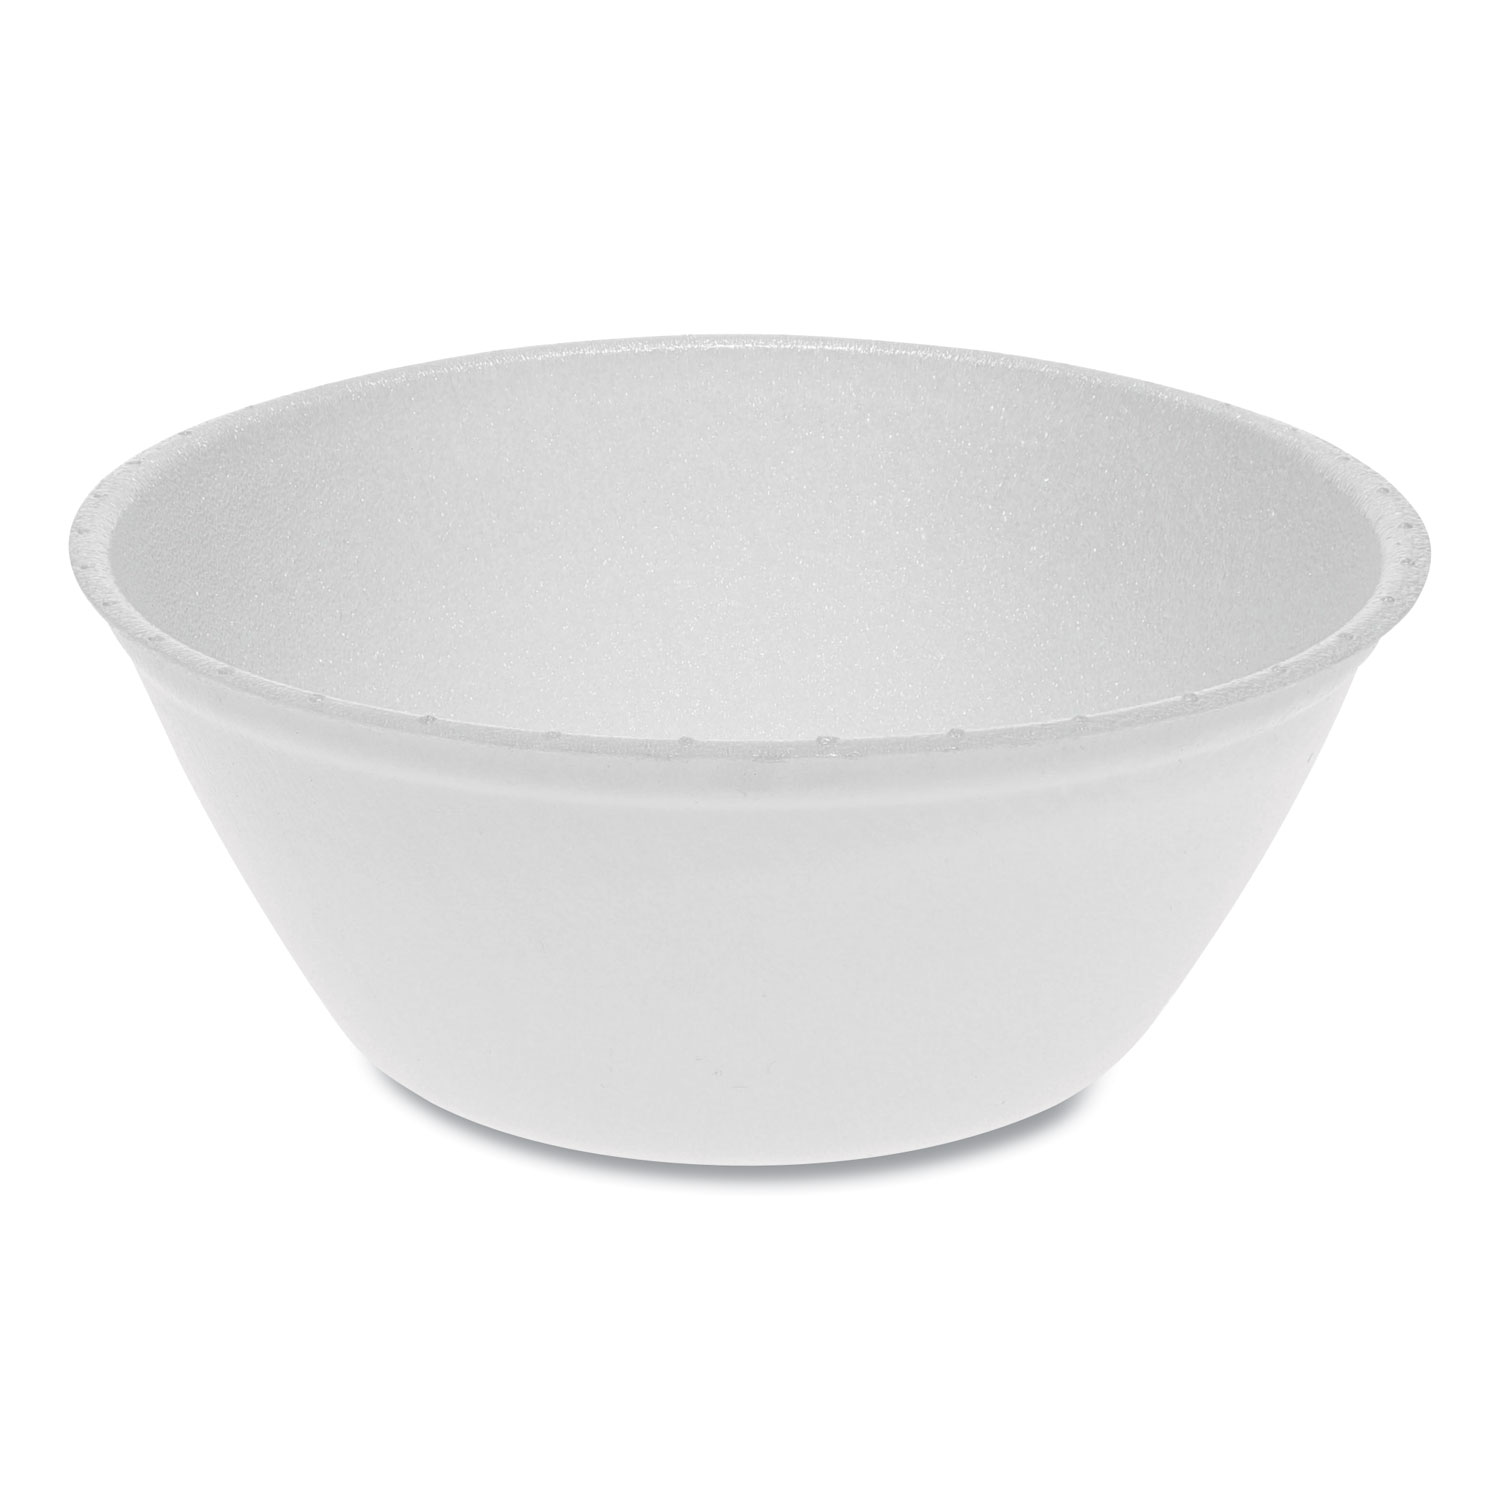  Pactiv 0TH100220000 Unlaminated Foam Dinnerware, Bowl, 22 oz, White, 504/Carton (PCT0TH100220000) 